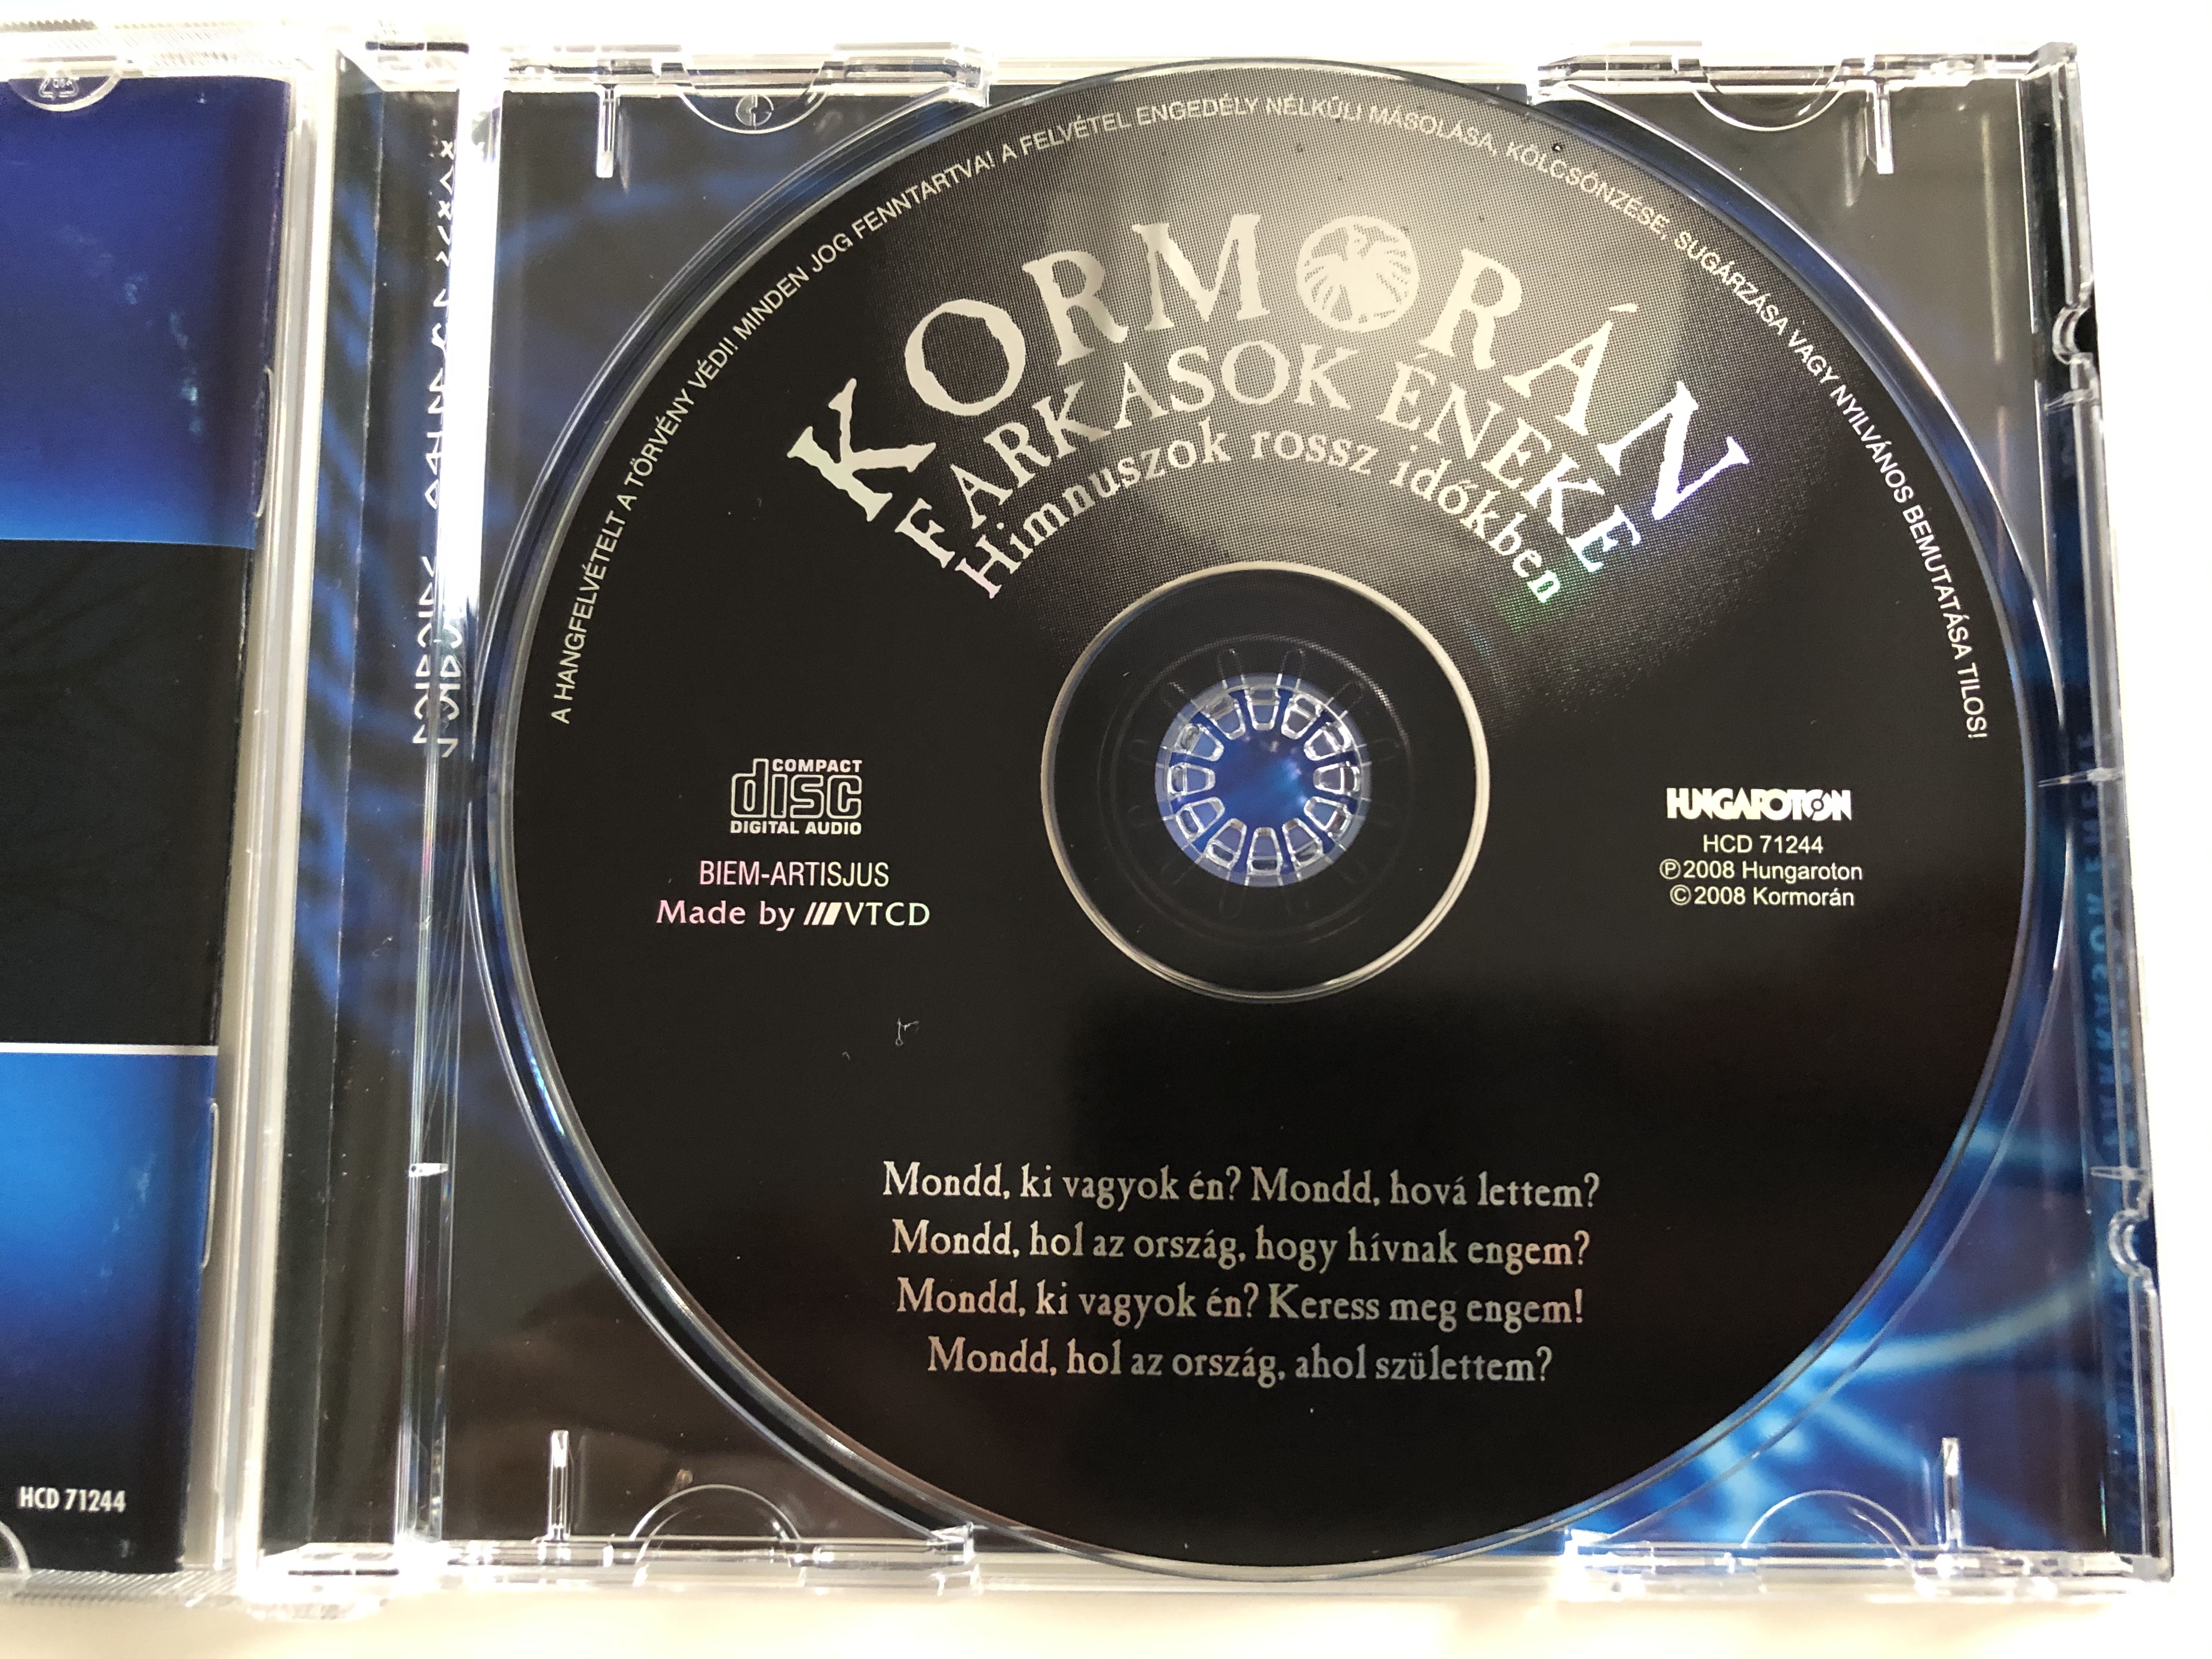 kormor-n-farkasok-neke-himnuszok-rossz-id-kben-hungaroton-audio-cd-2008-hcd-71244-8-.jpg